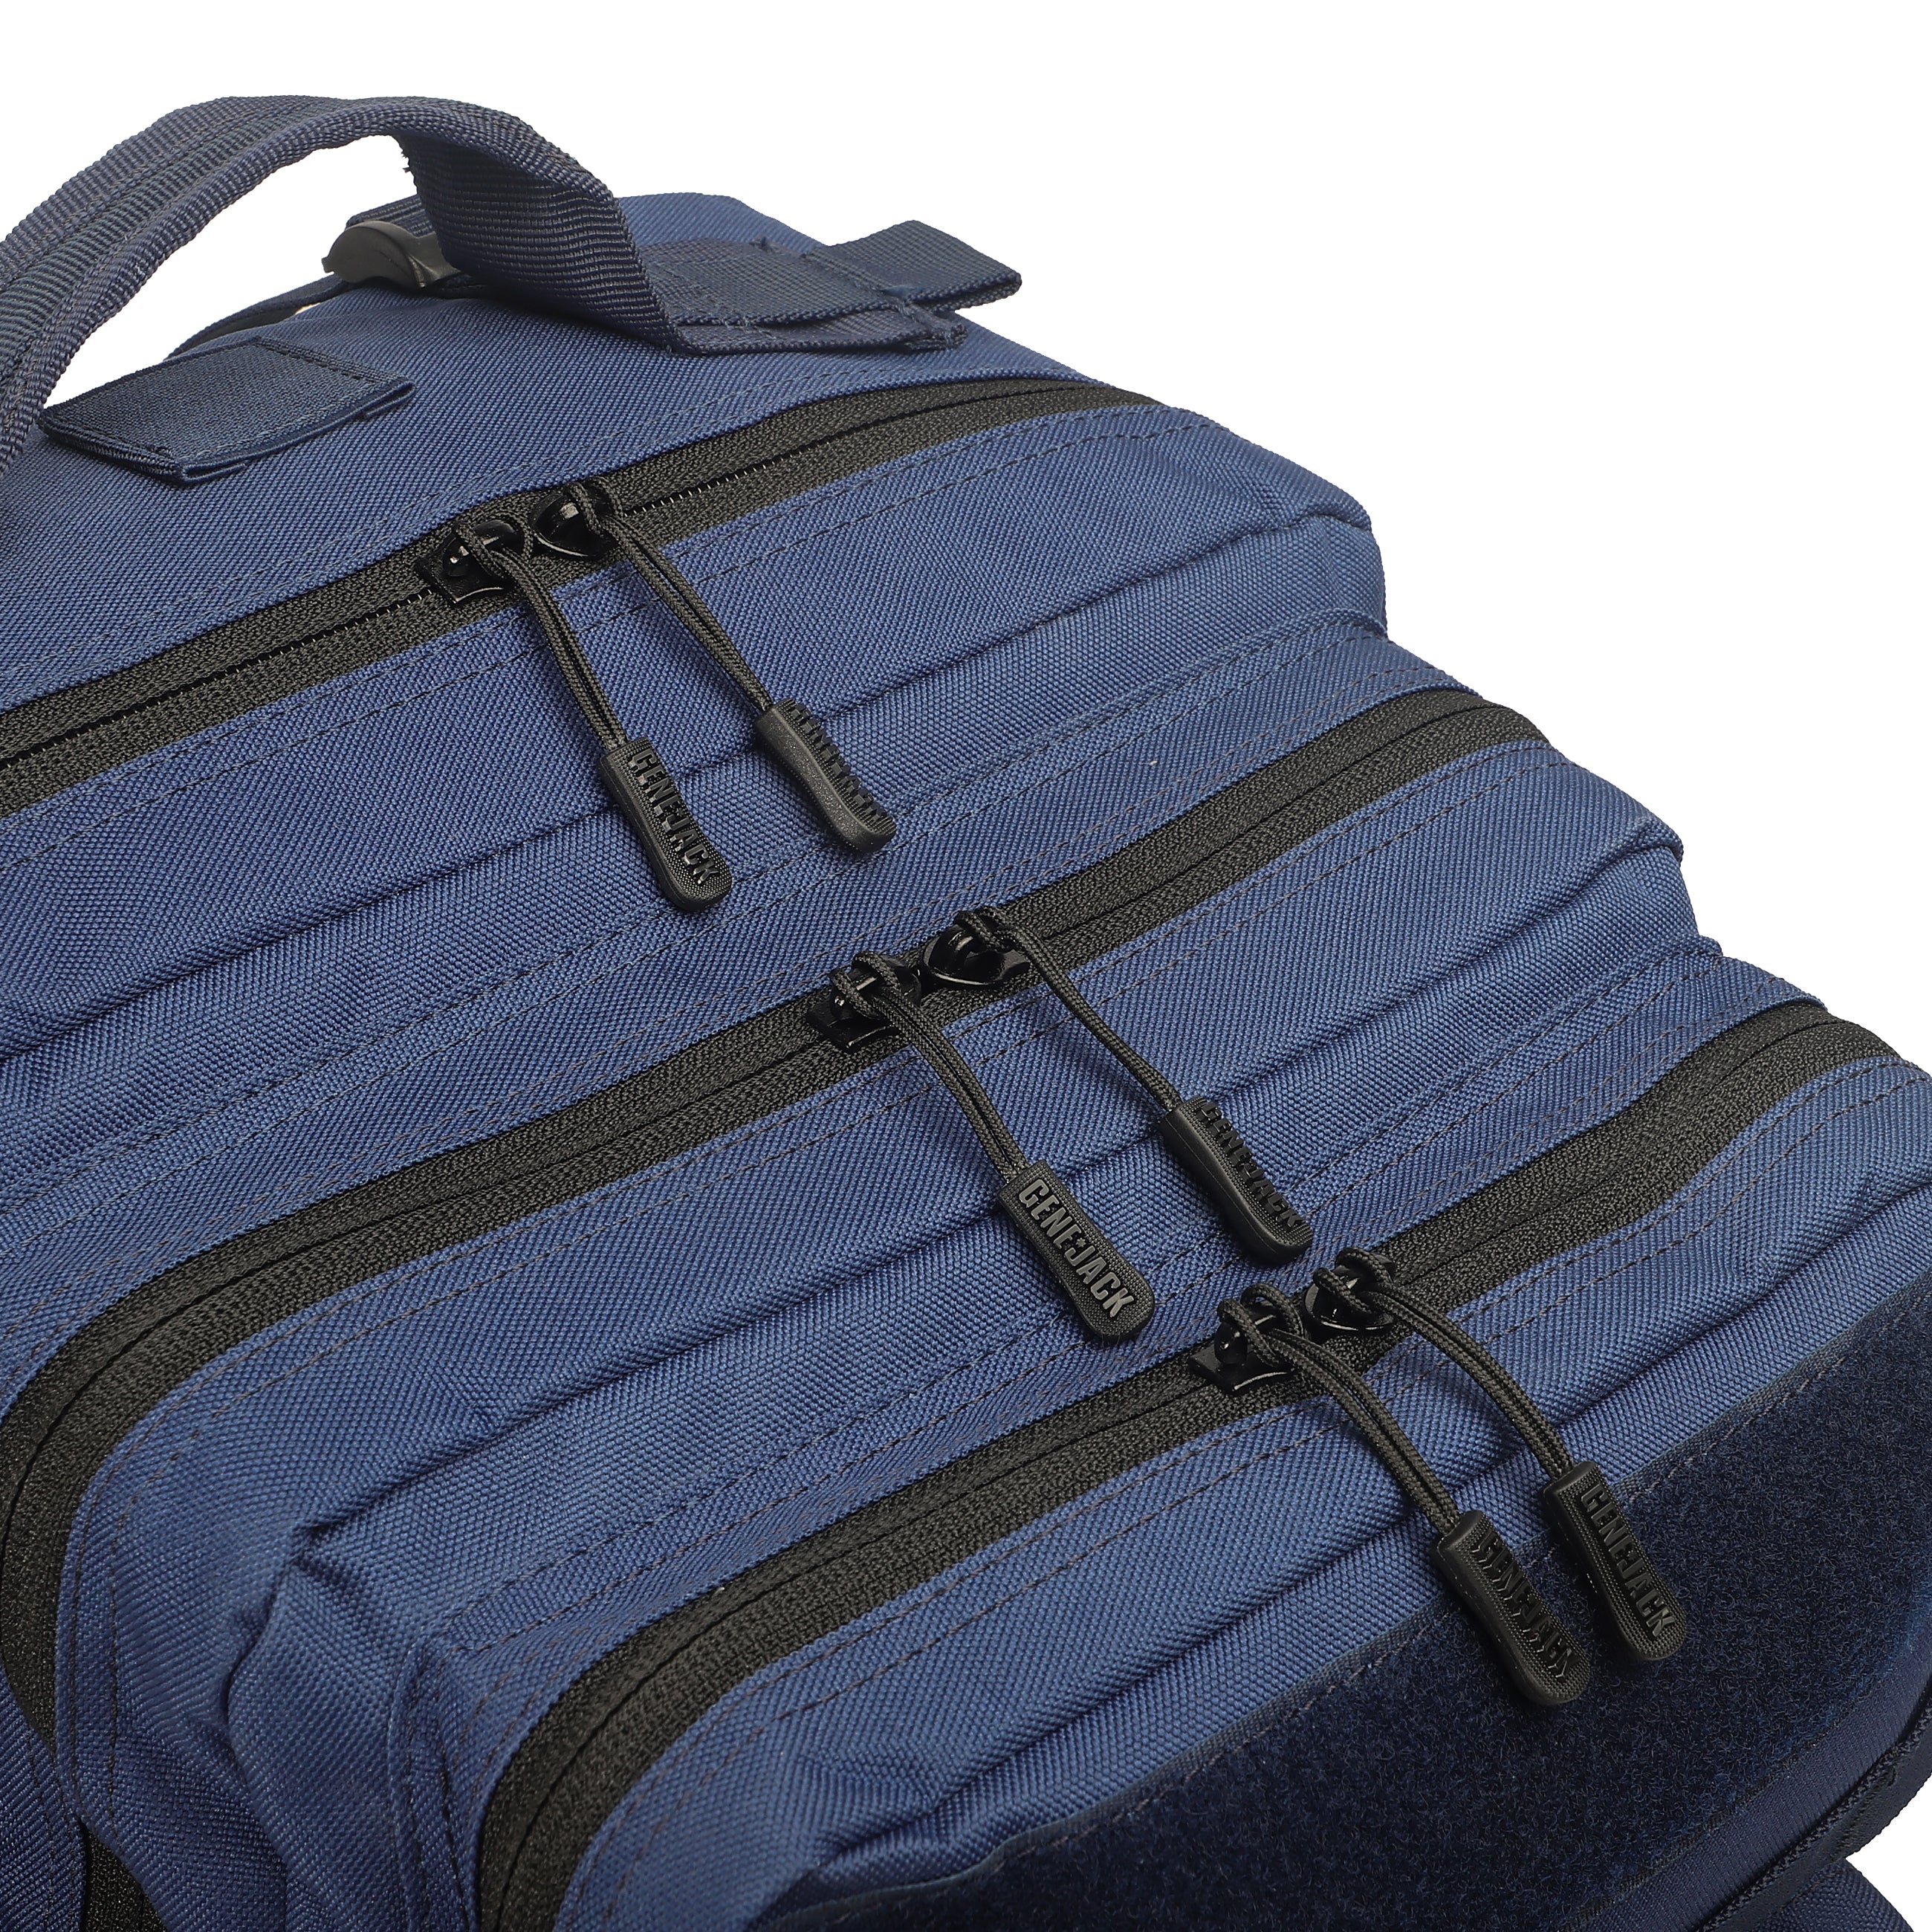 3.0 Titan Bag - 45L Blue from Genejack for Genejack WOD